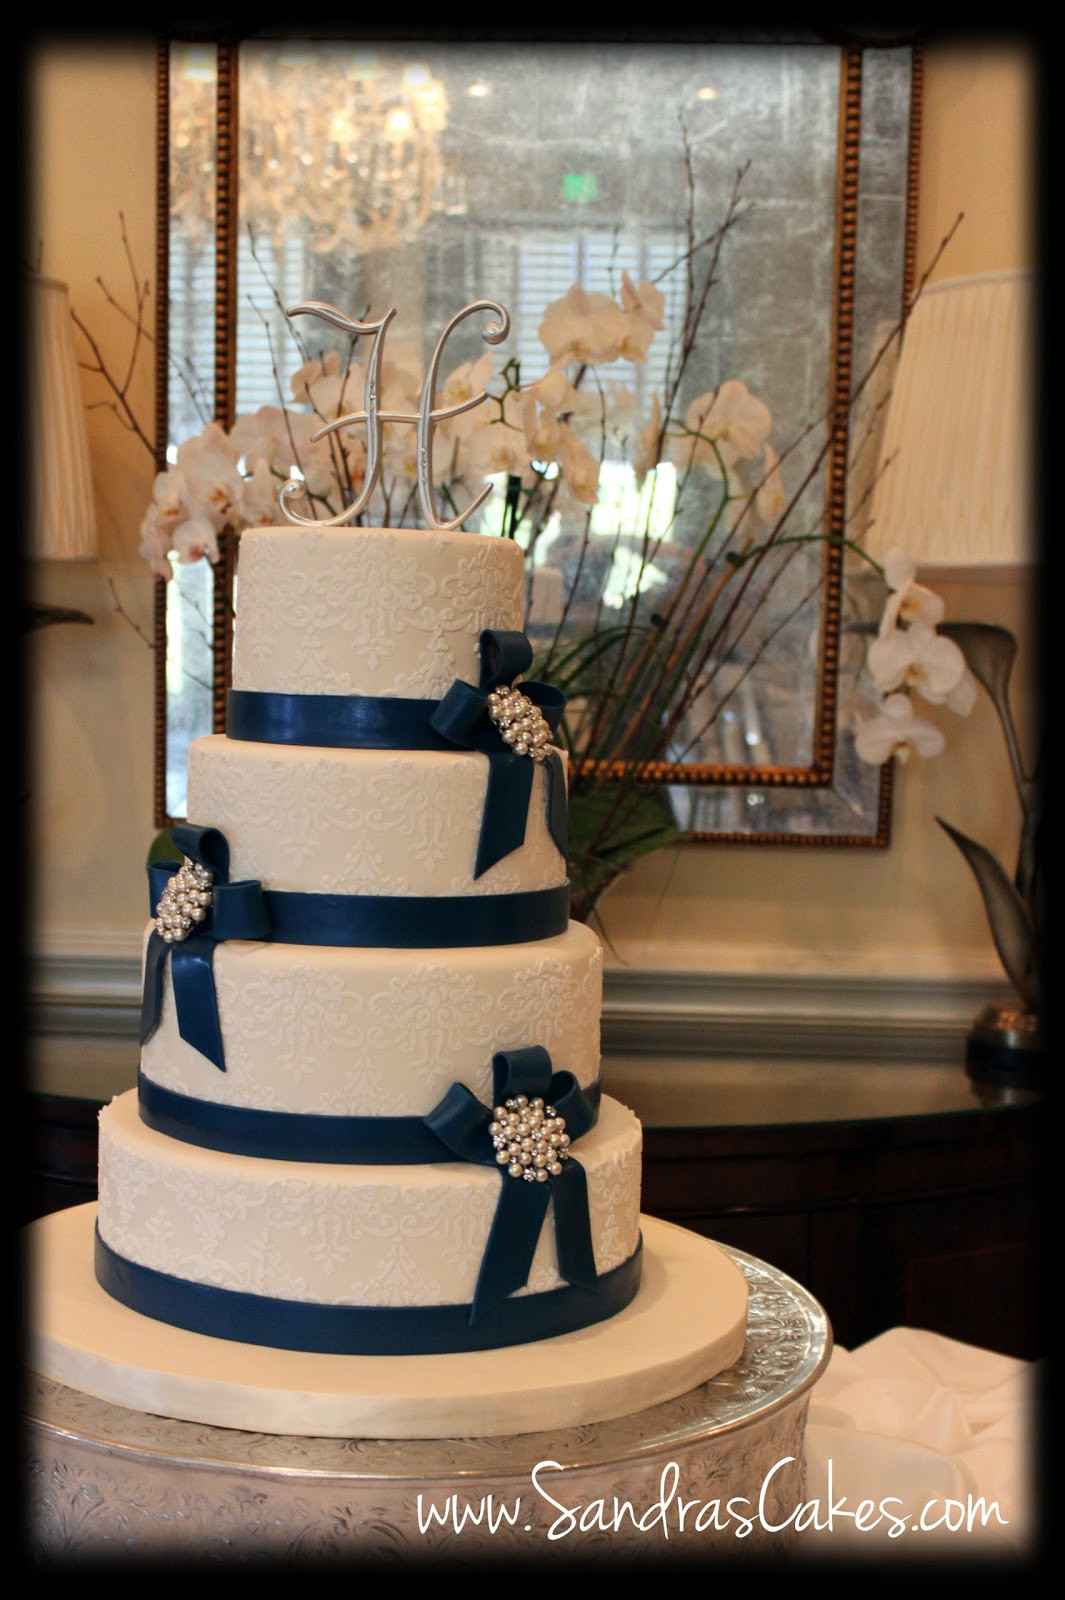 Pics Of Wedding Cakes
 Elegant and Classy Wedding Cake